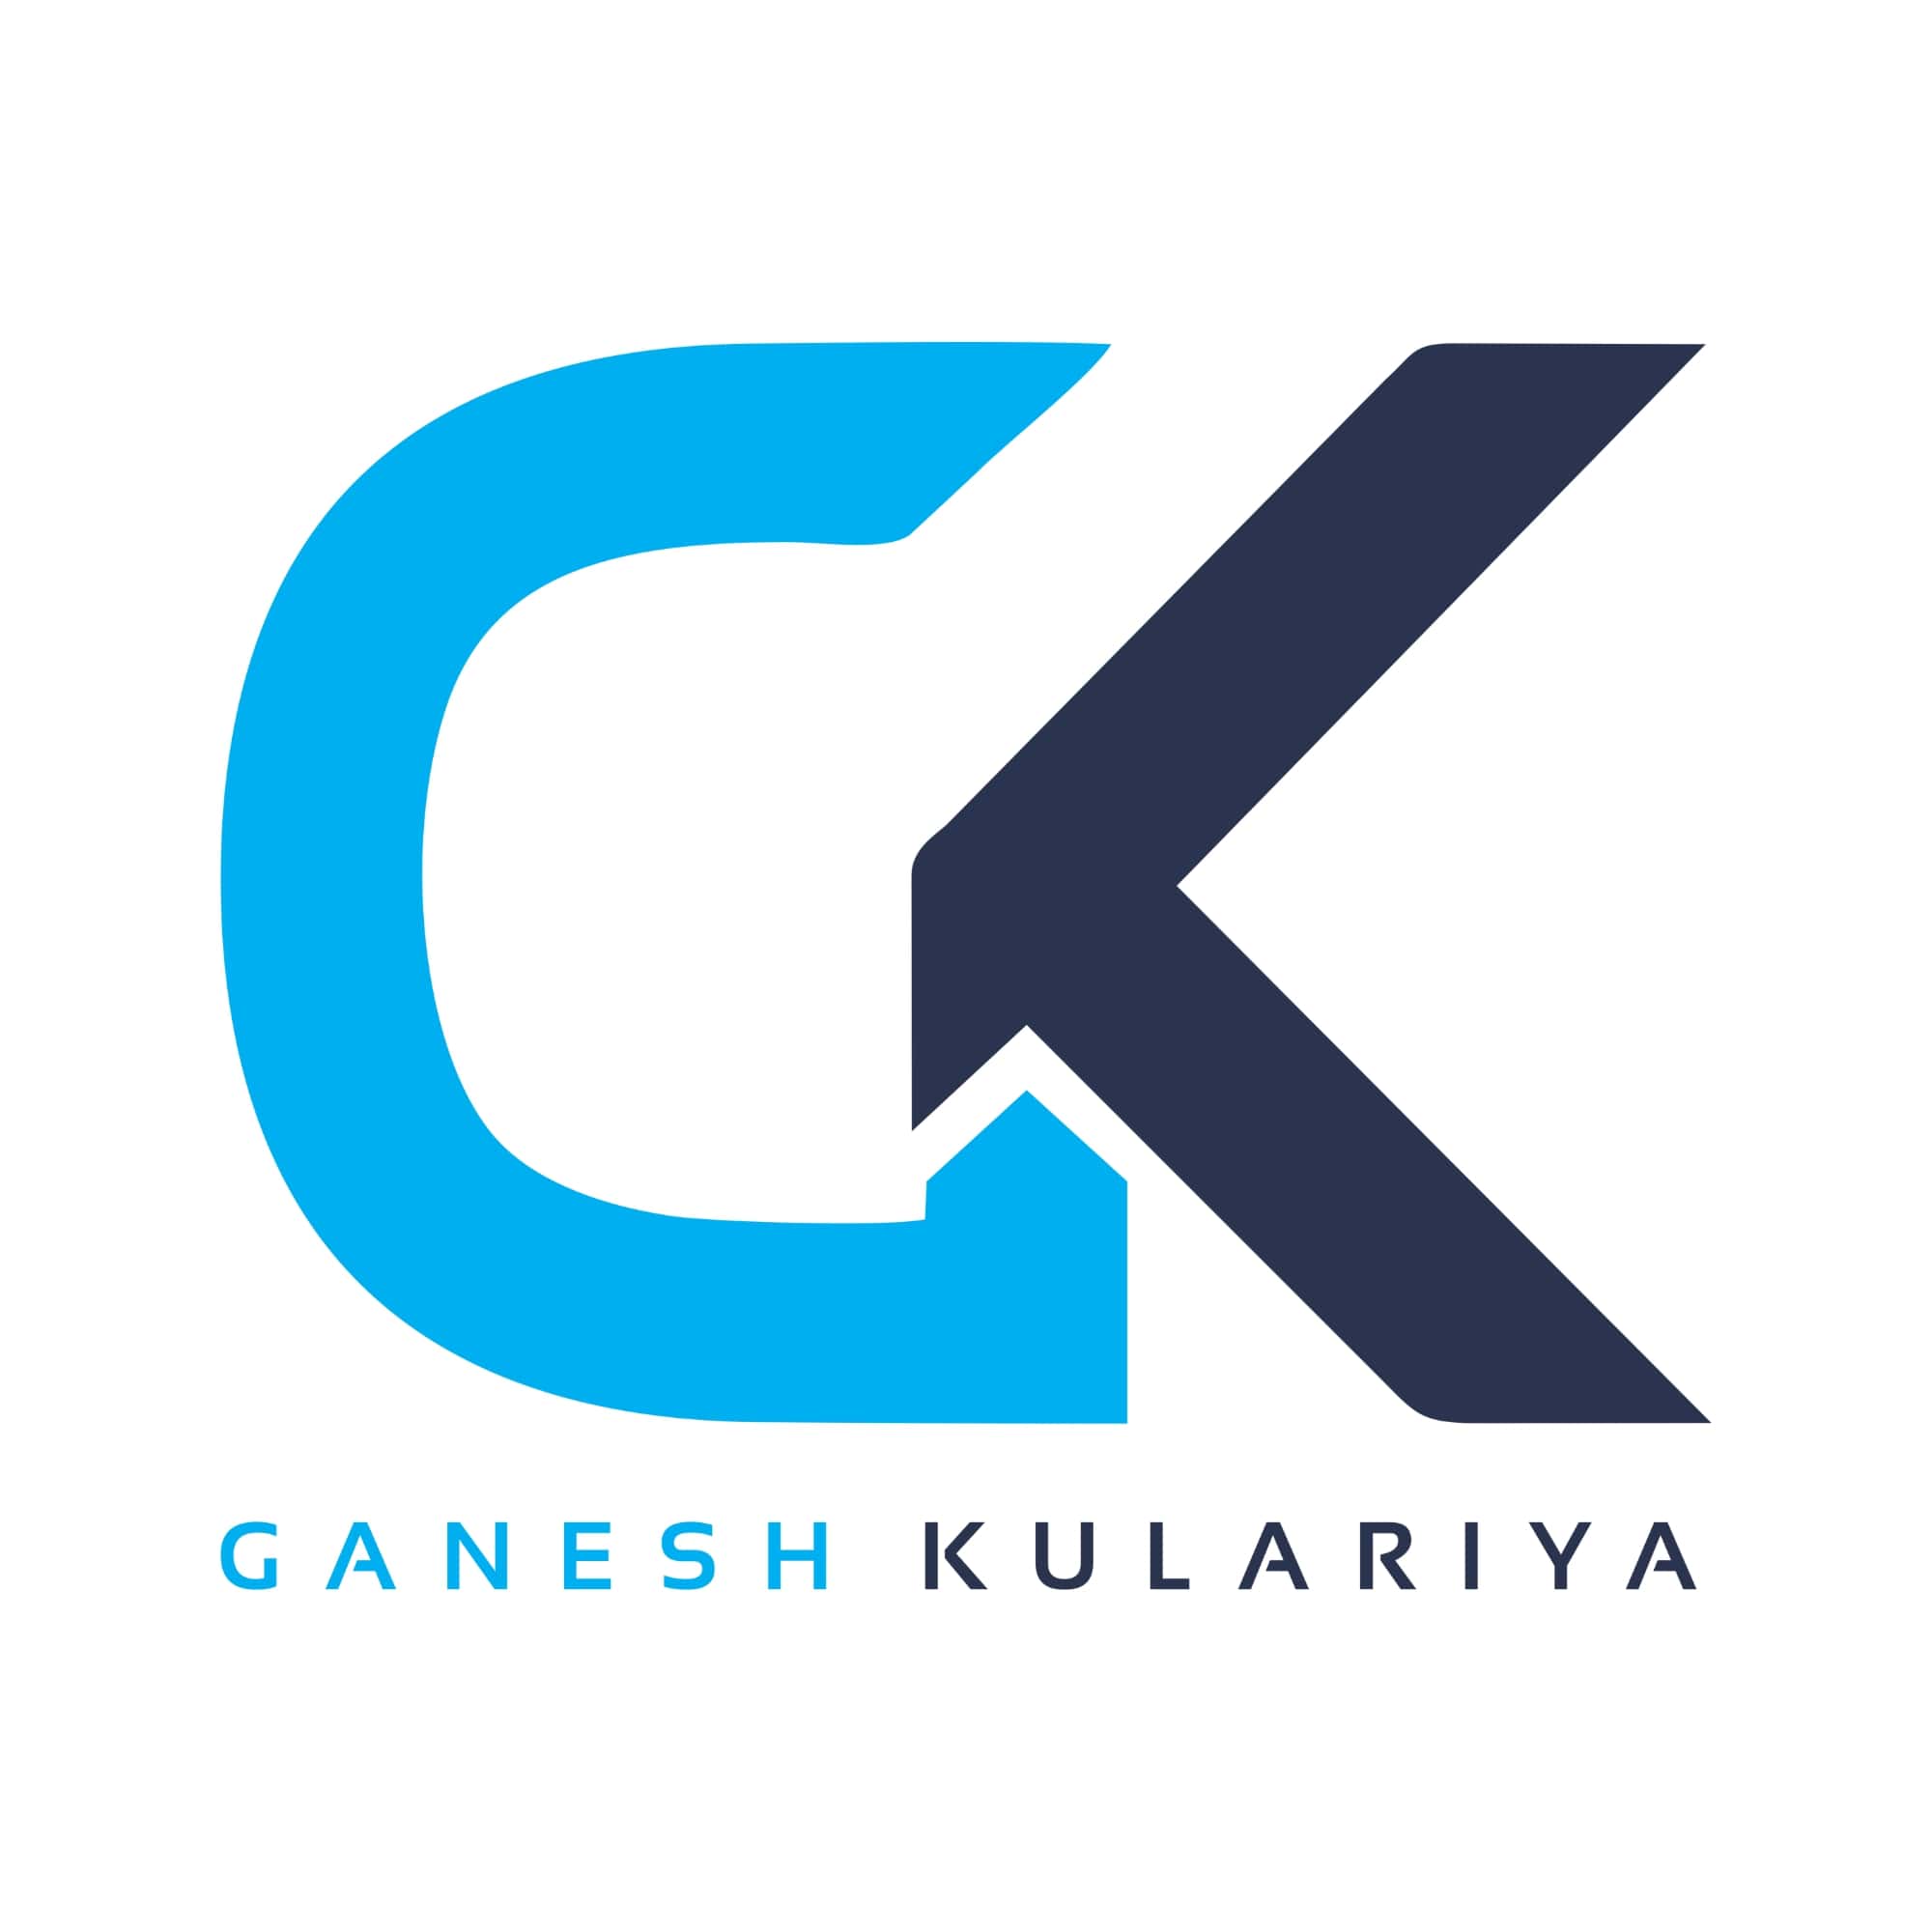 Ganesh Kulariya